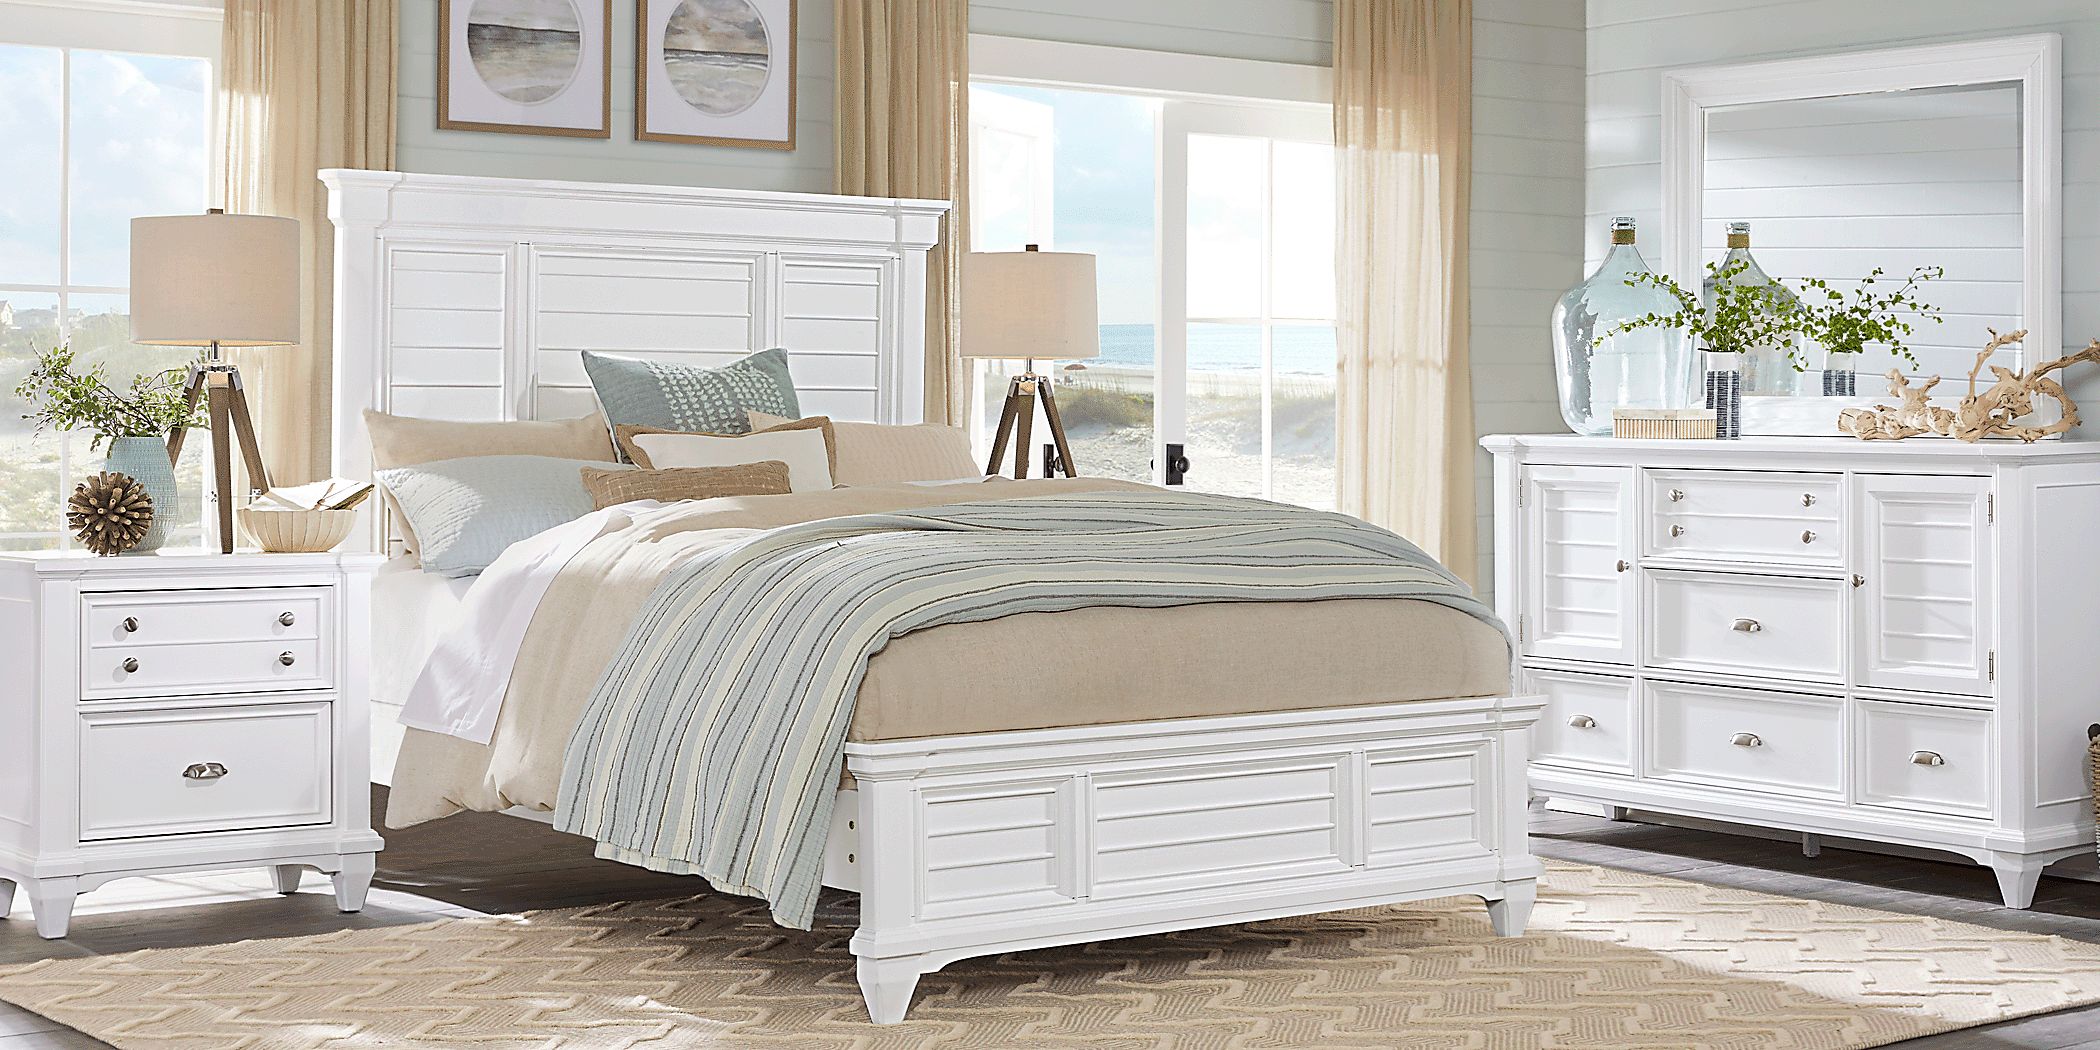 Hilton Head 5 Pc White Colors,White Queen Bedroom Set With Mirror, 3 Pc  Queen Panel Bed, Door Dresser - Rooms To Go